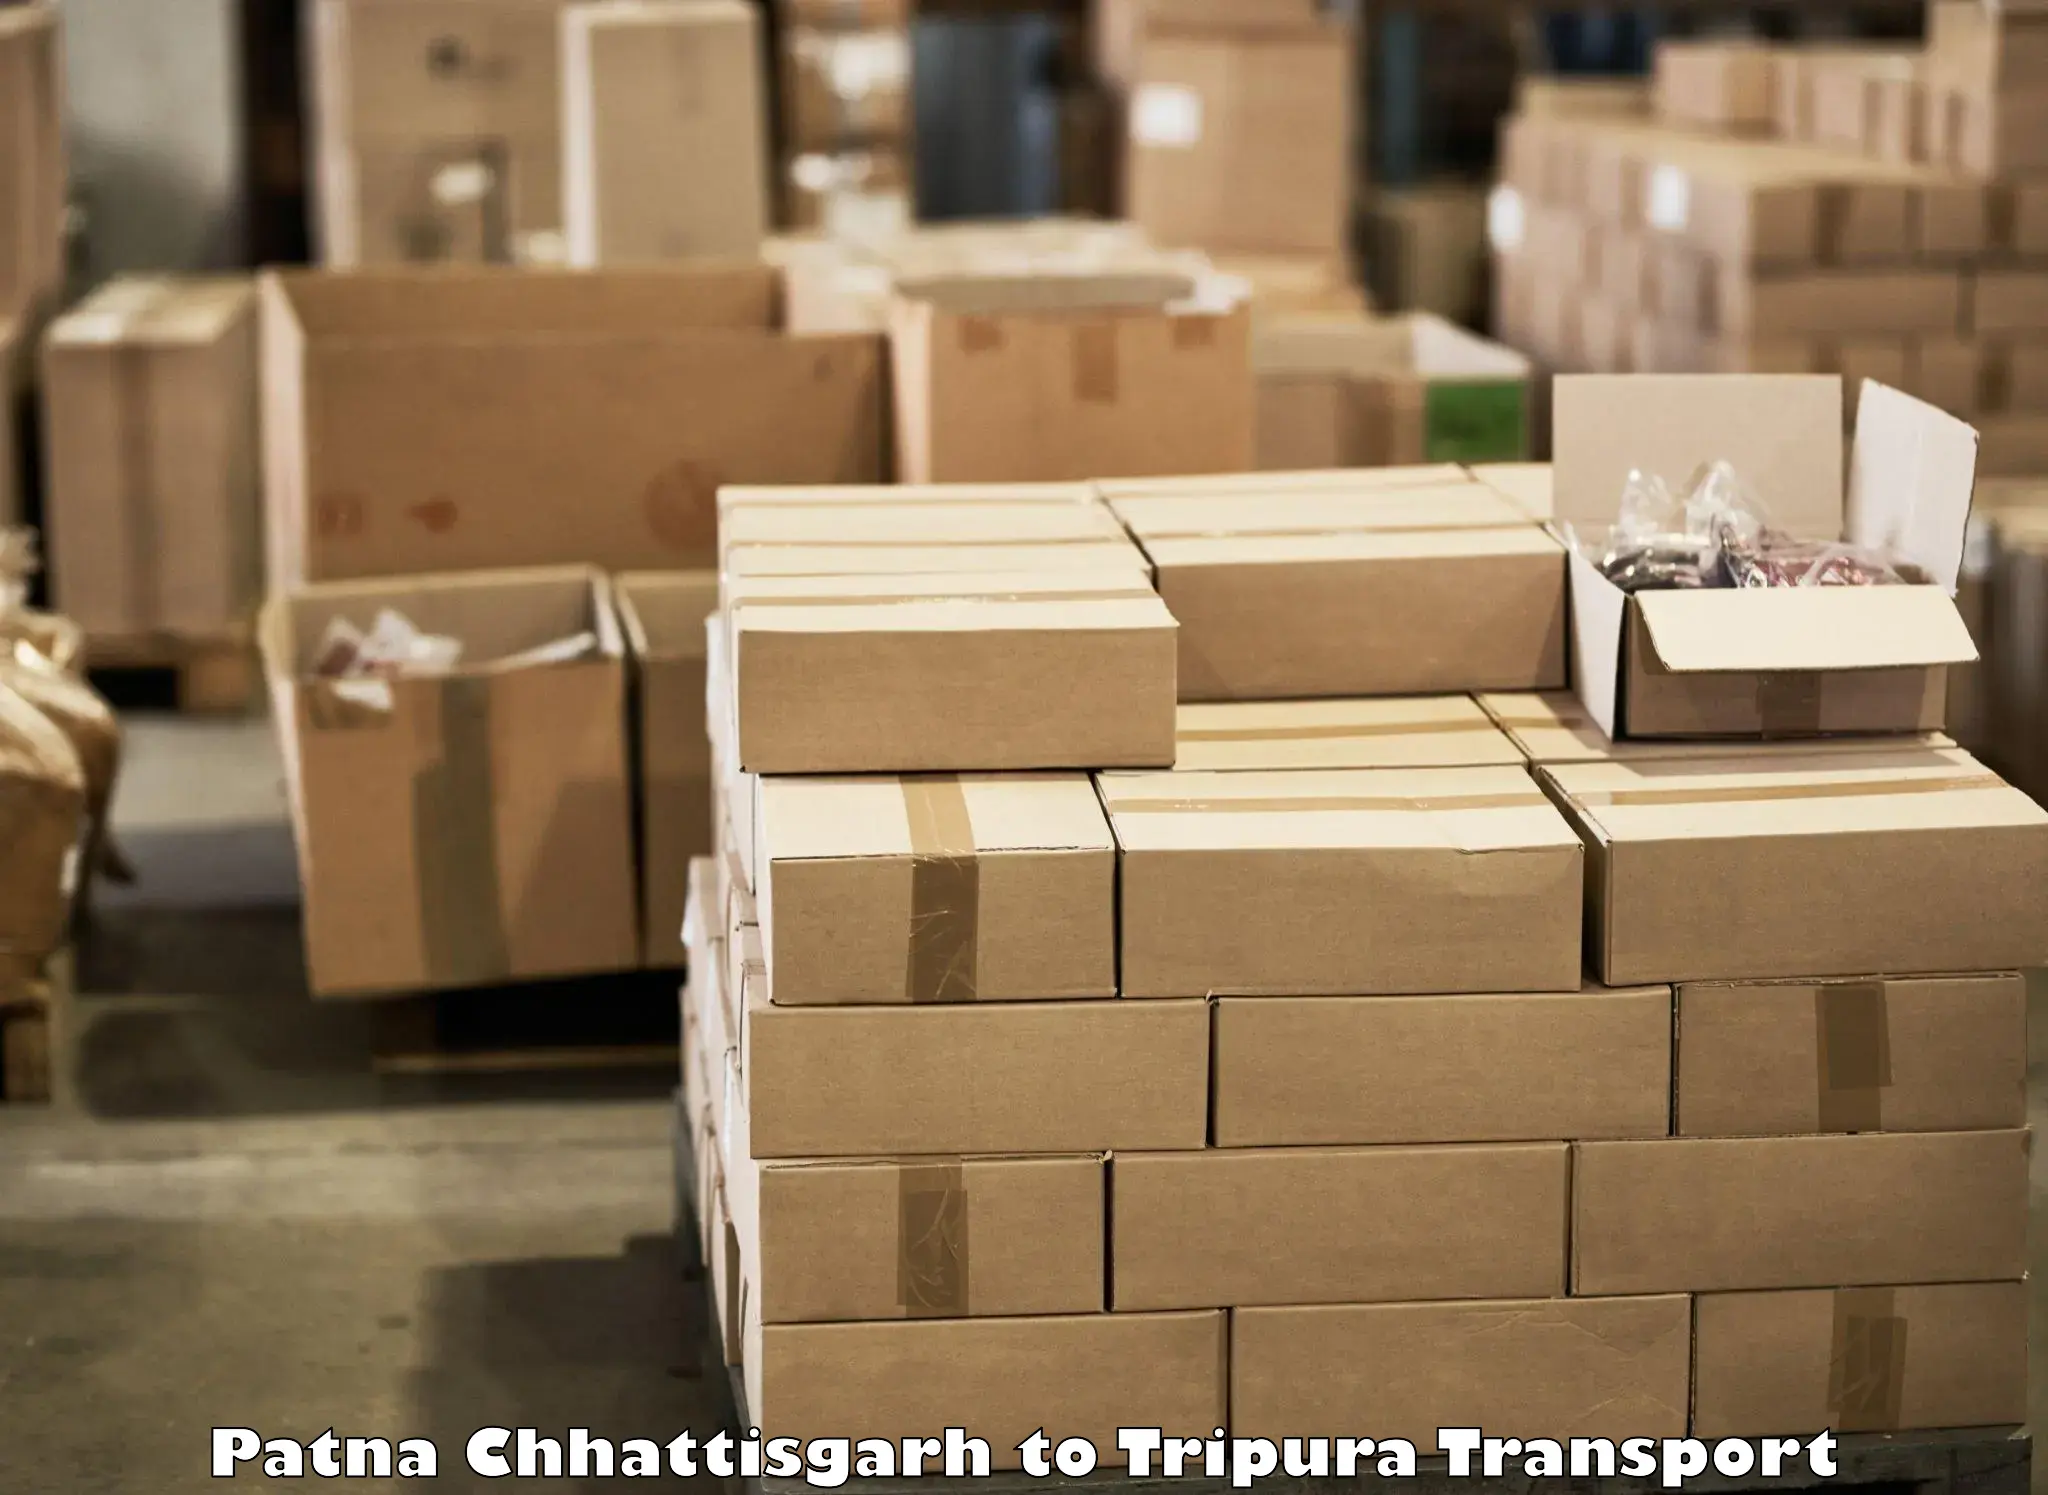 Two wheeler parcel service Patna Chhattisgarh to Udaipur Tripura